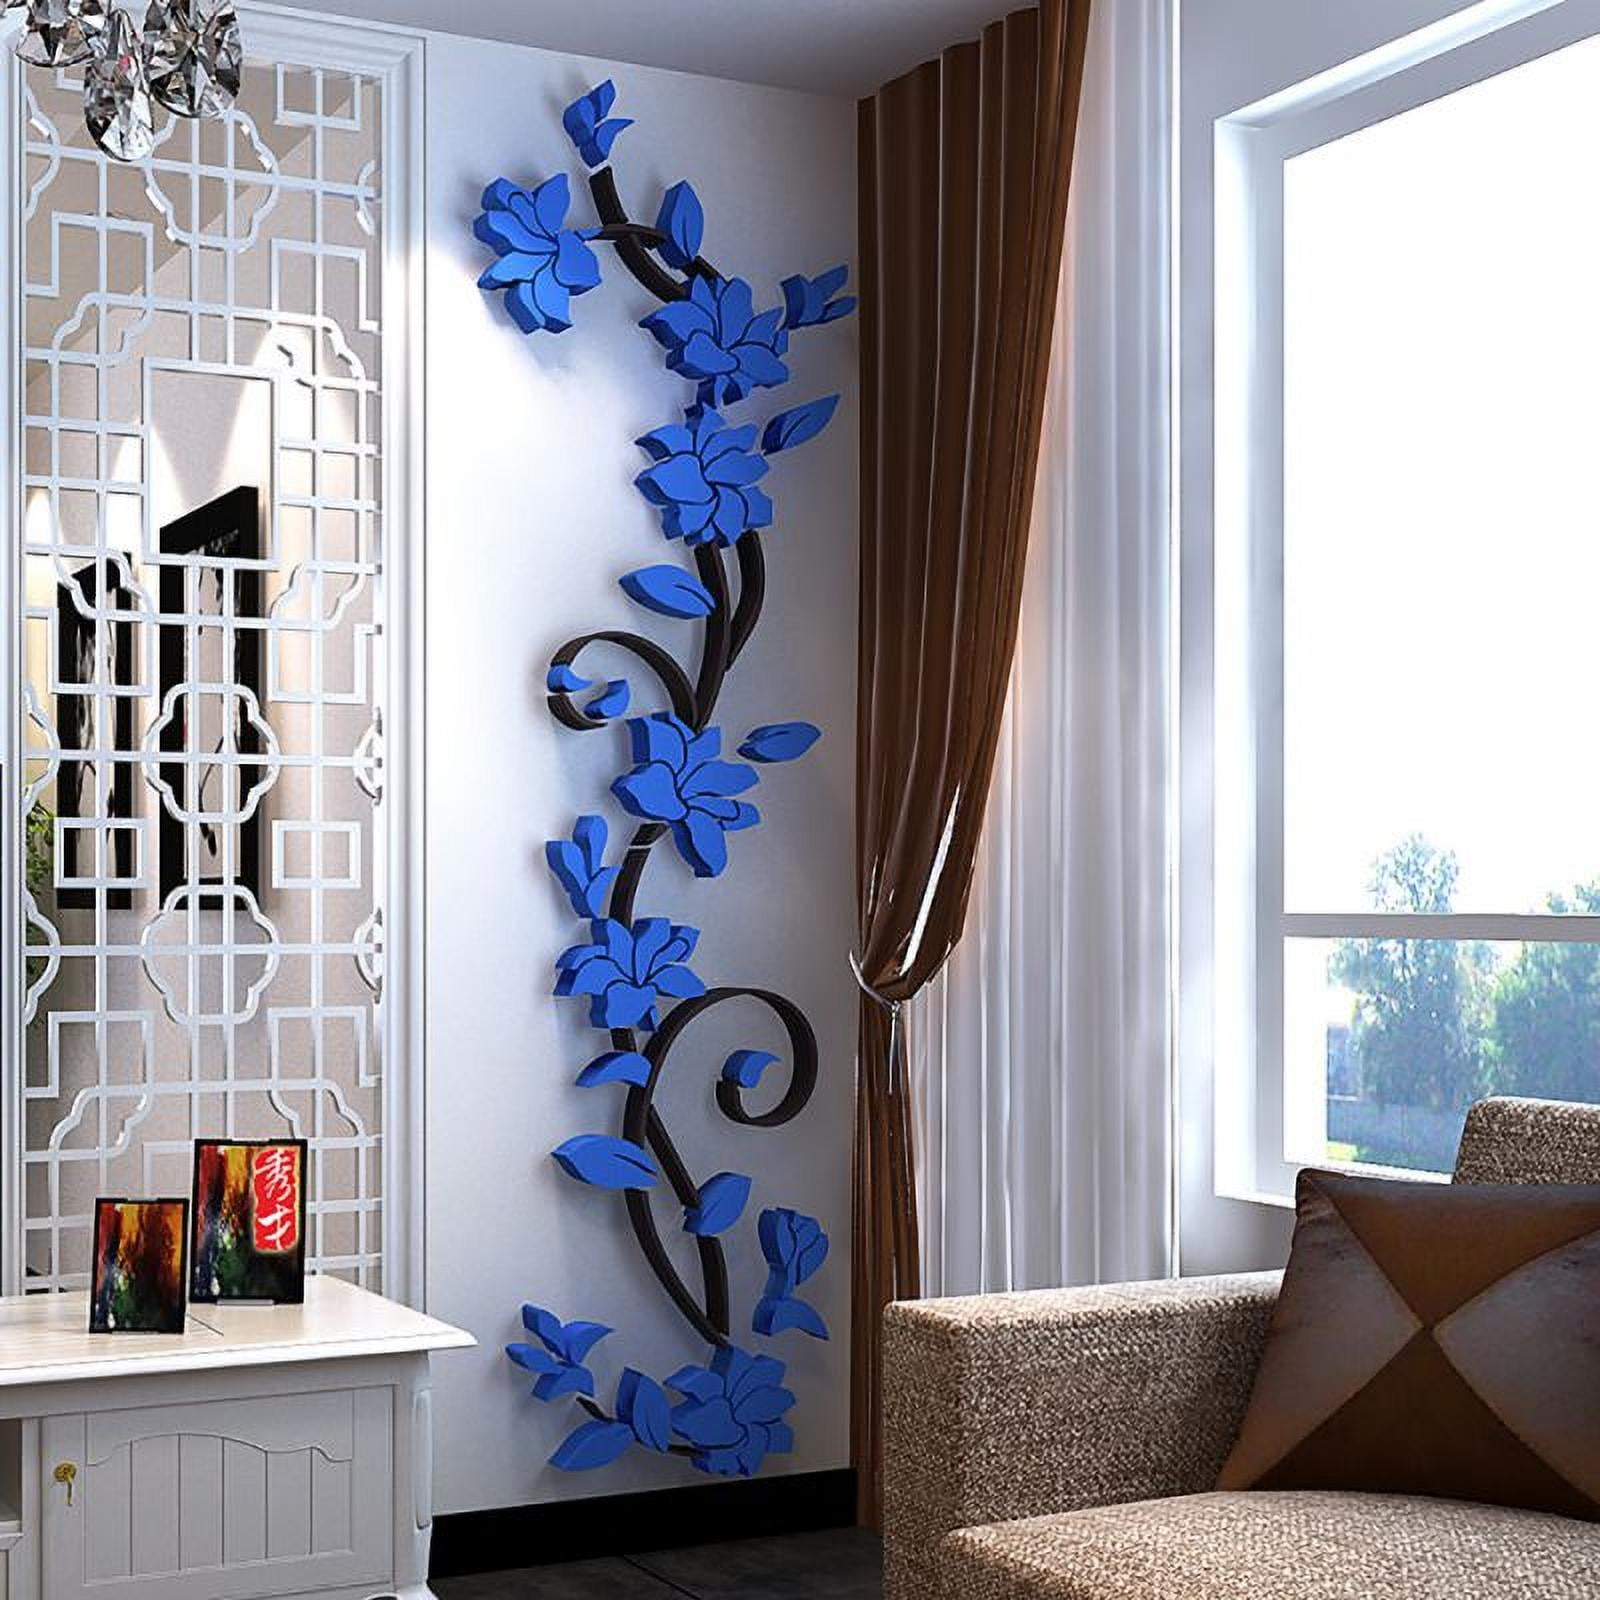 3D Flower Decal Vinyl Decor Art Home Living Room Wall Sticker Removable Mural 